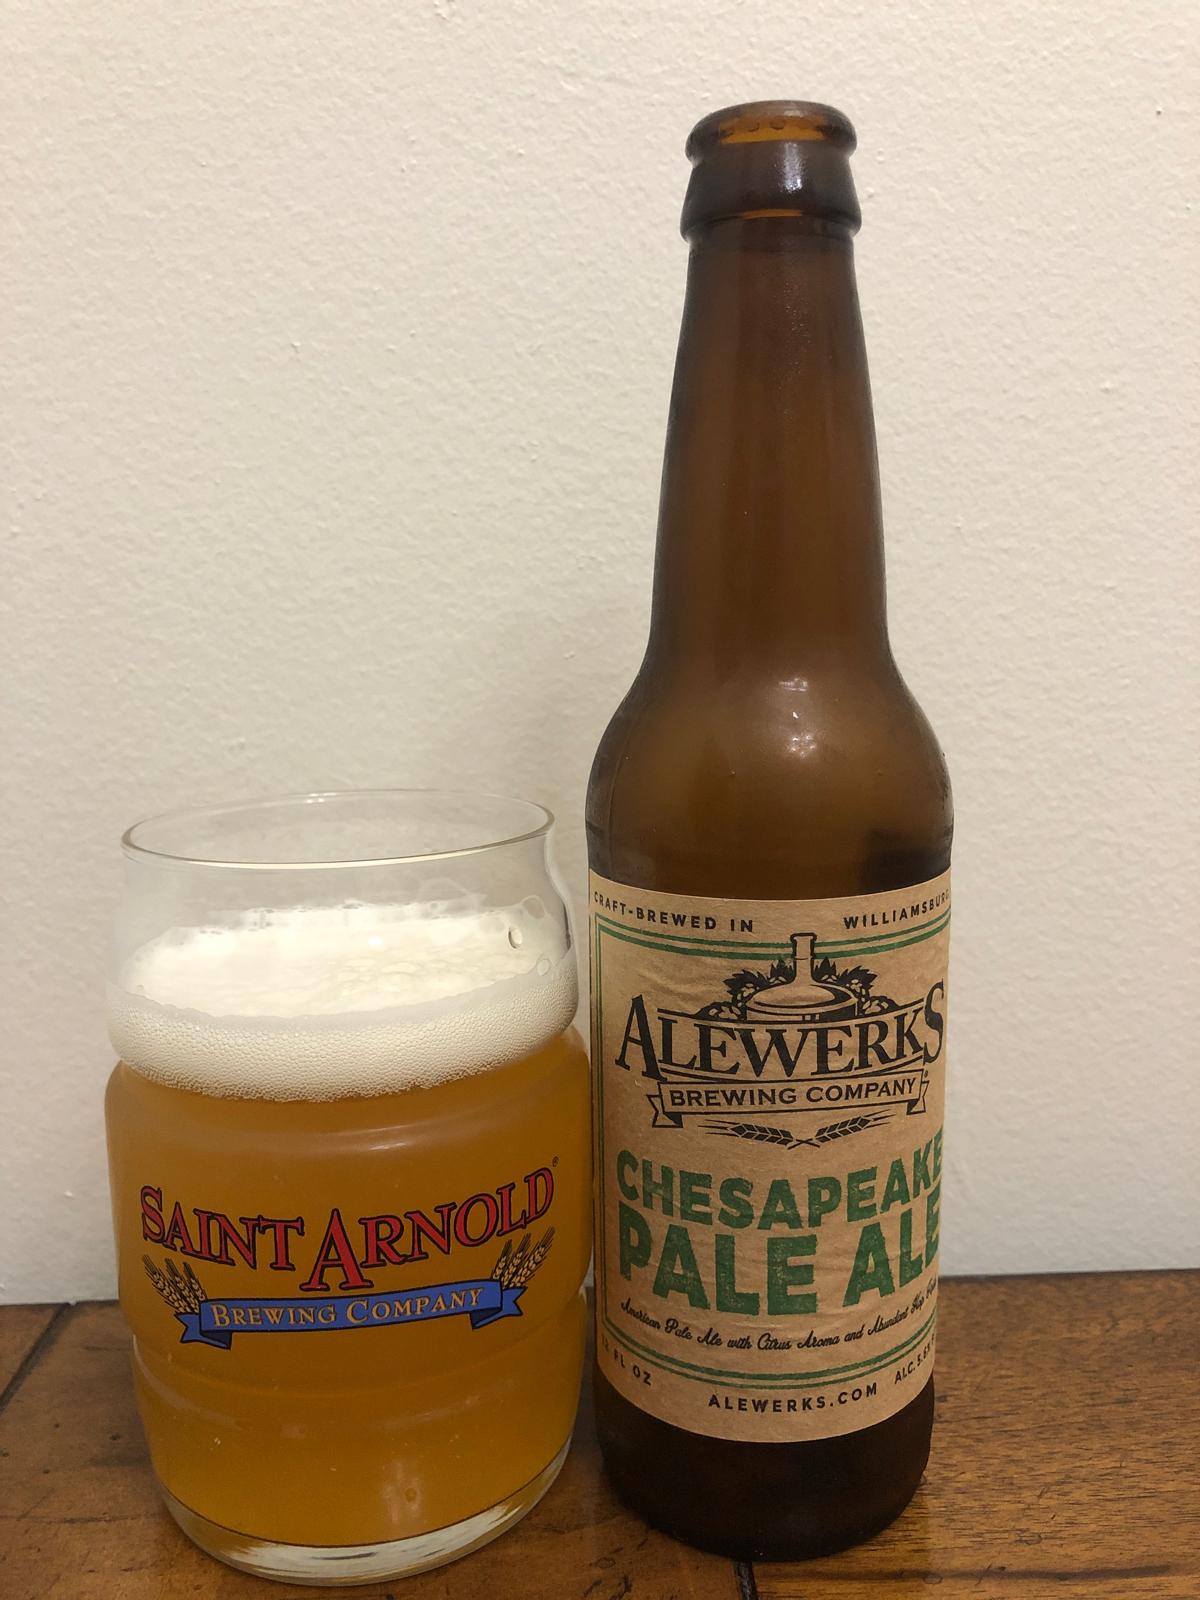 Chesapeake Pale Ale